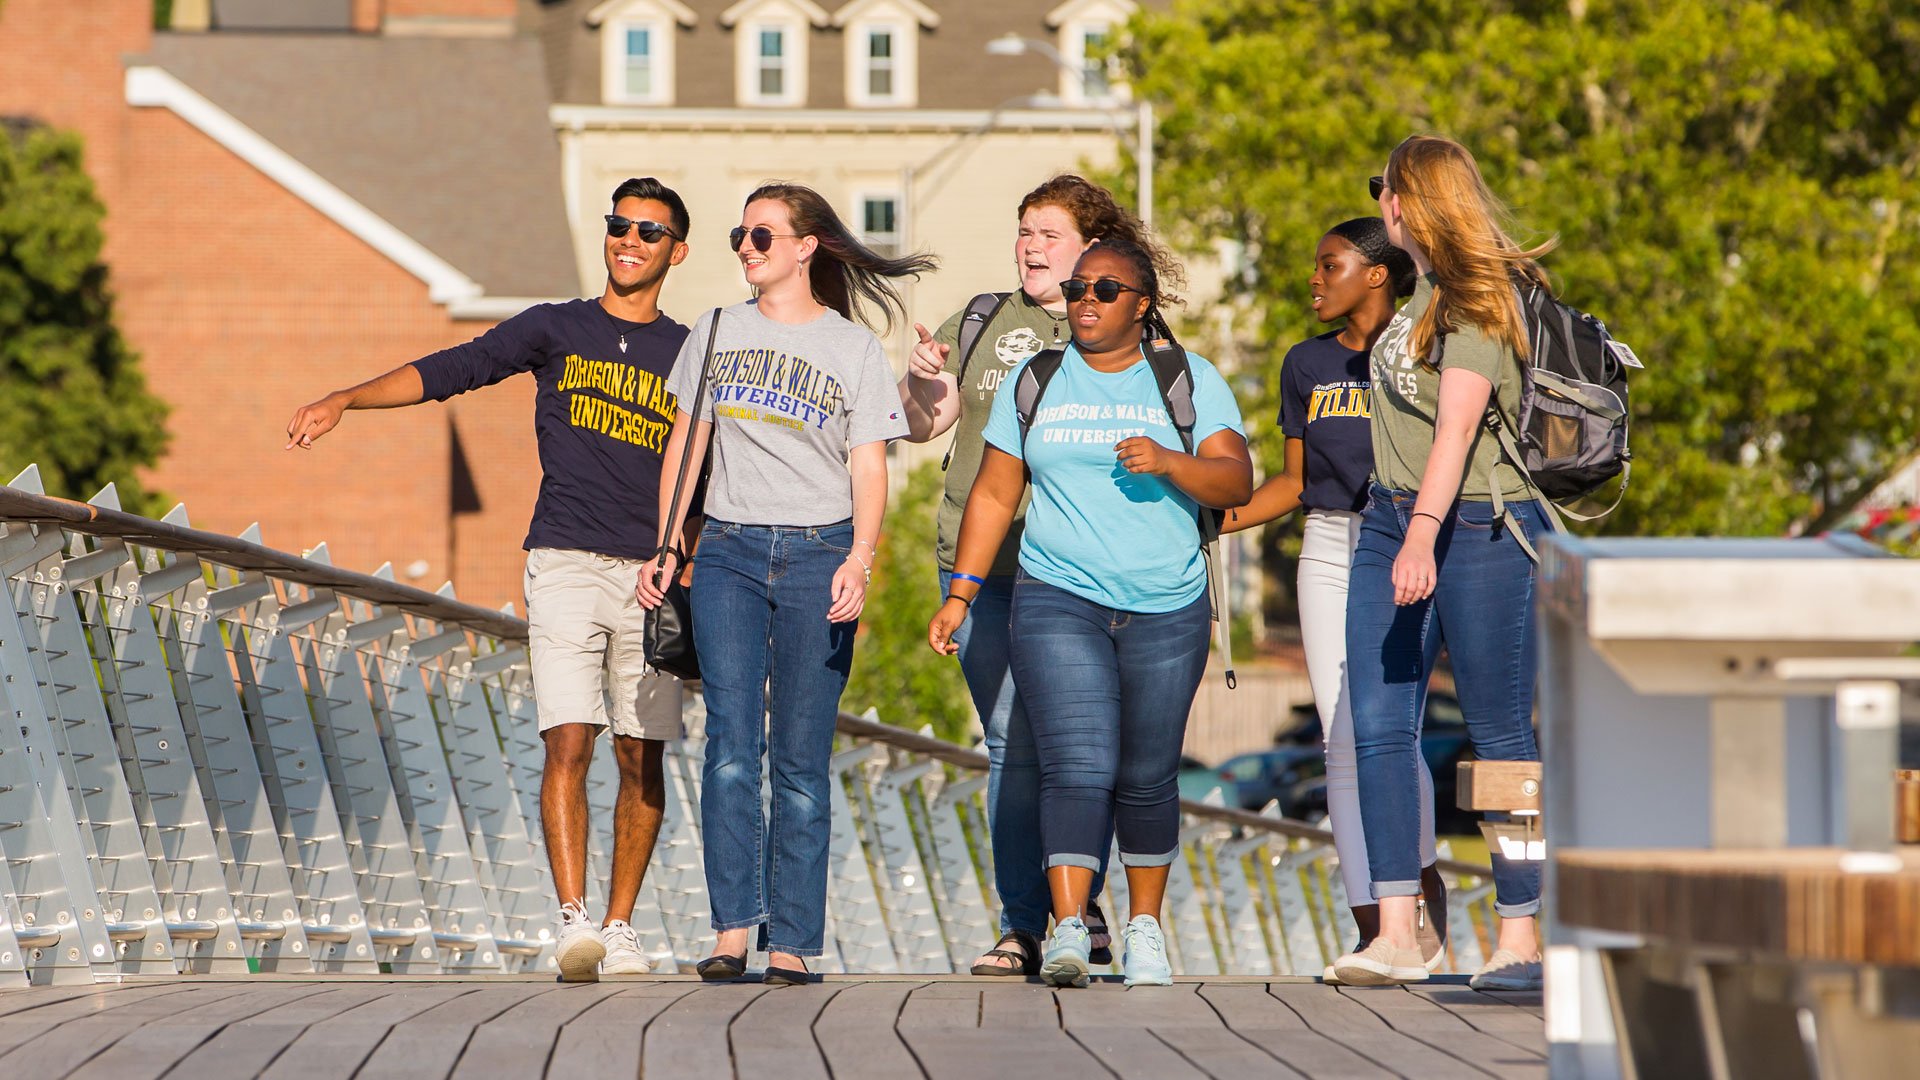 JWU students walking across the new Pedestrian Bridge